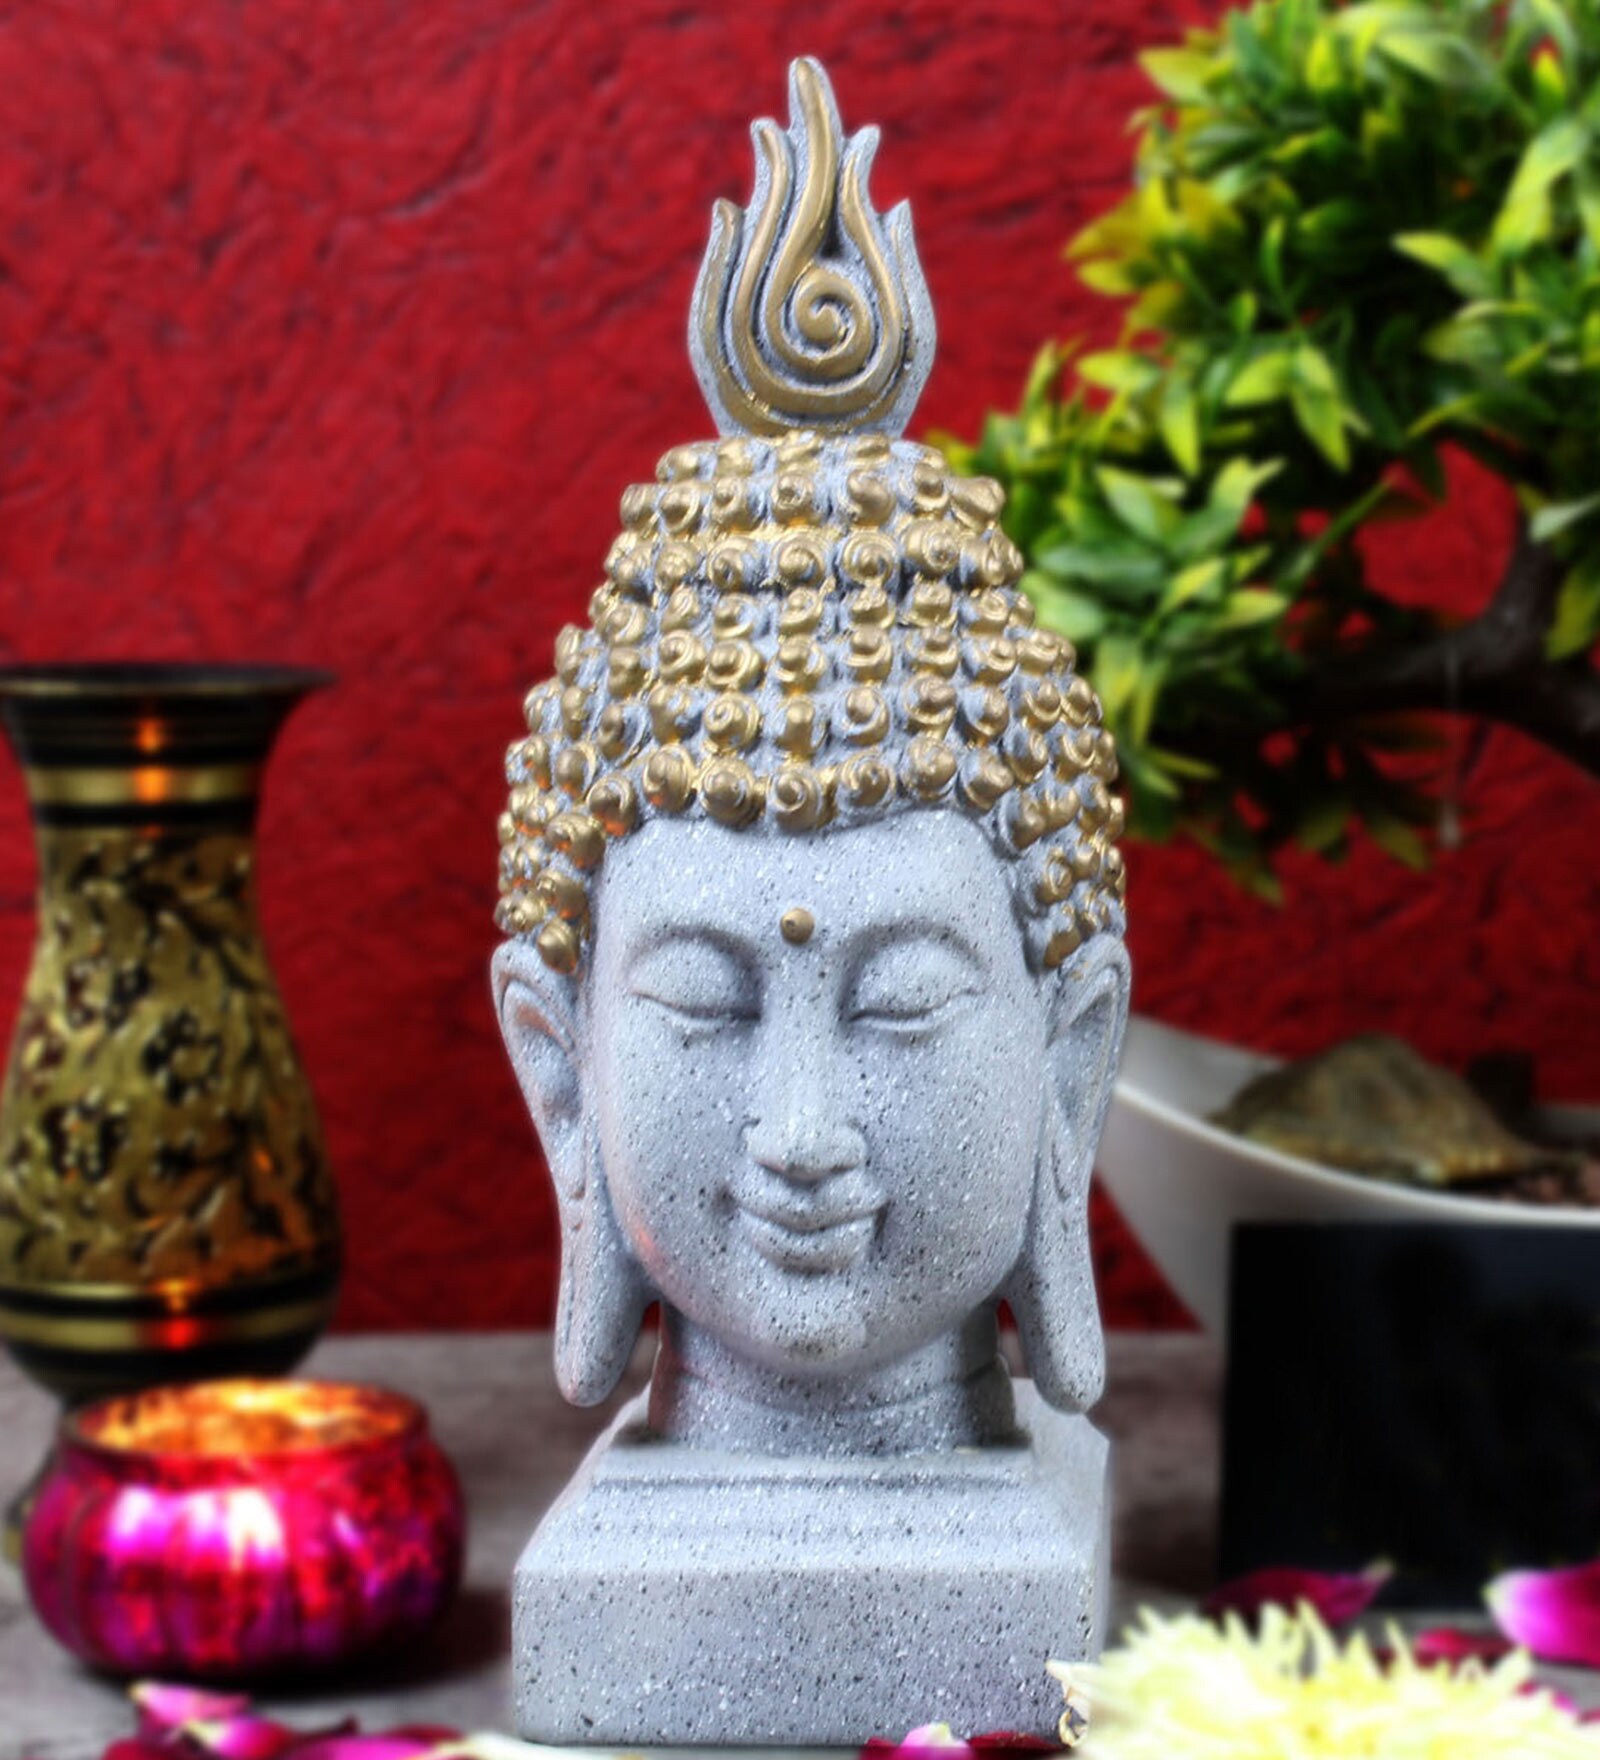 Grey Resin Indian Buddha Head Idol